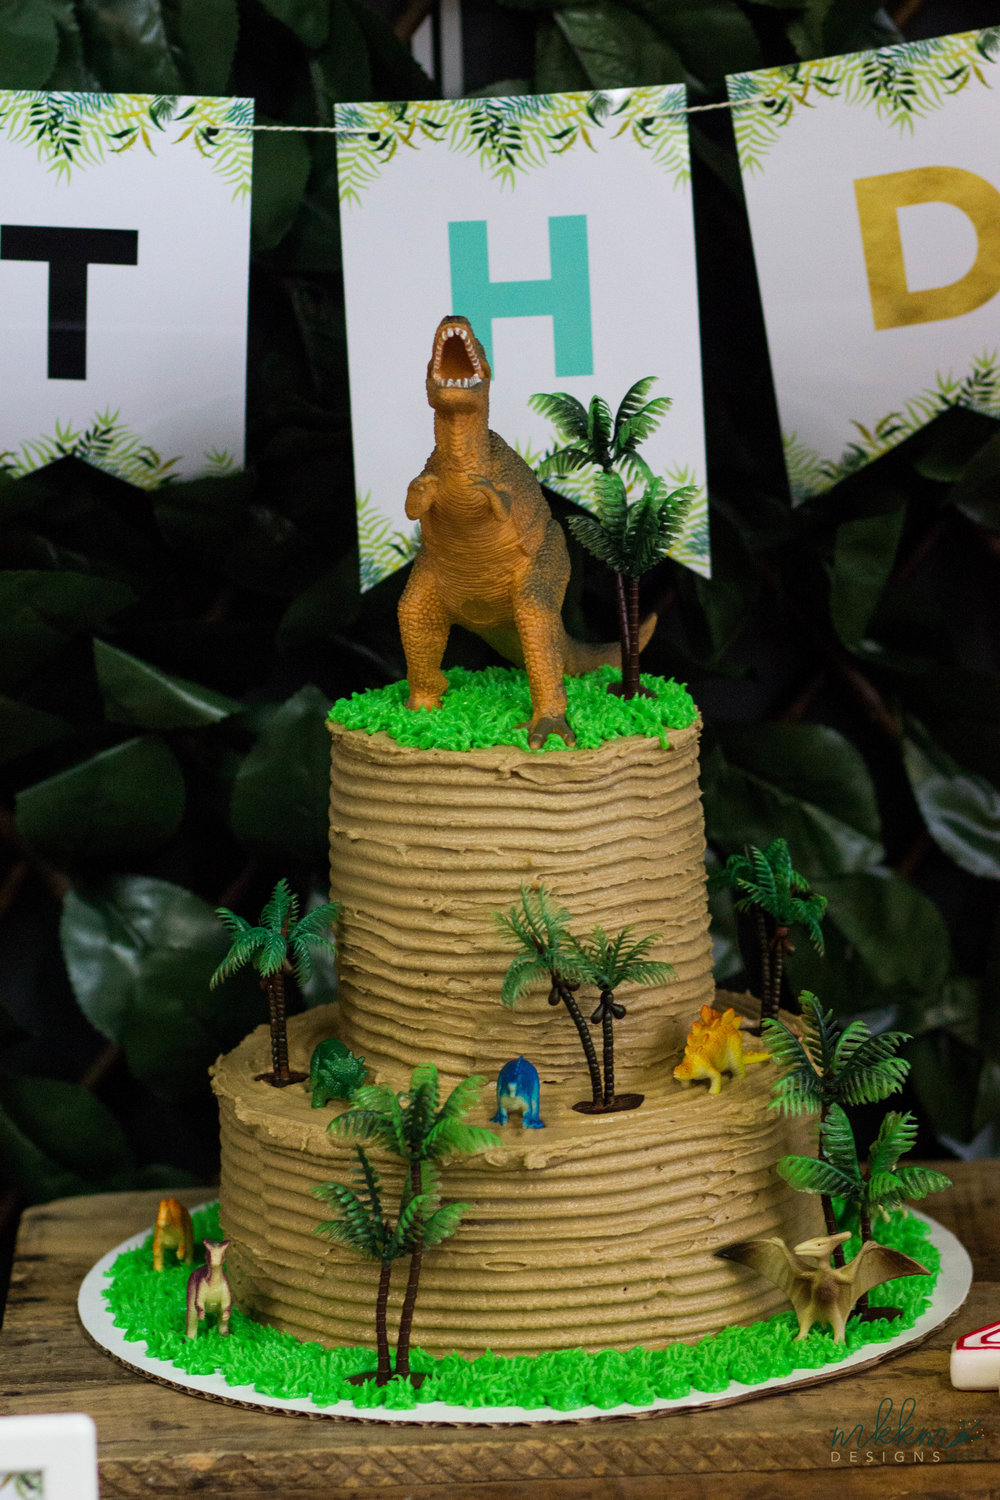 Black Glitter Dinosaur Birthday Cake Topper Dino Jurassic Park T-Rex Theme Kids Boys Birthday Party Decorations Supplies 